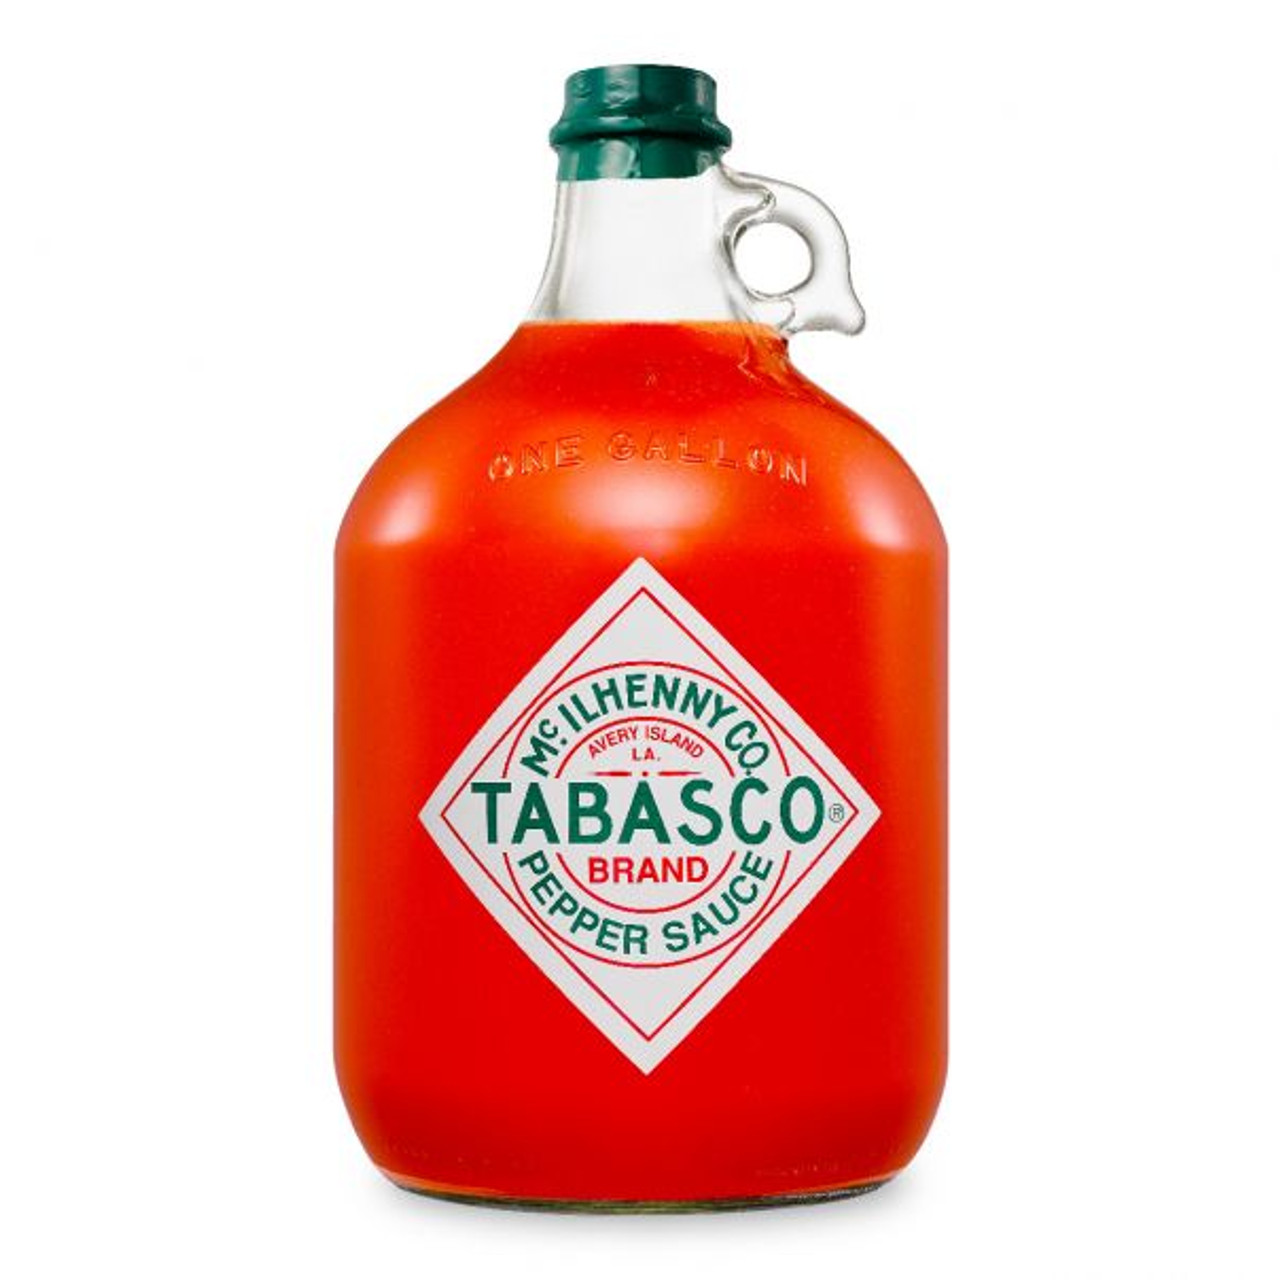 Tabasco Original Red Hot Sauce 1 Gallon Glass Bottle